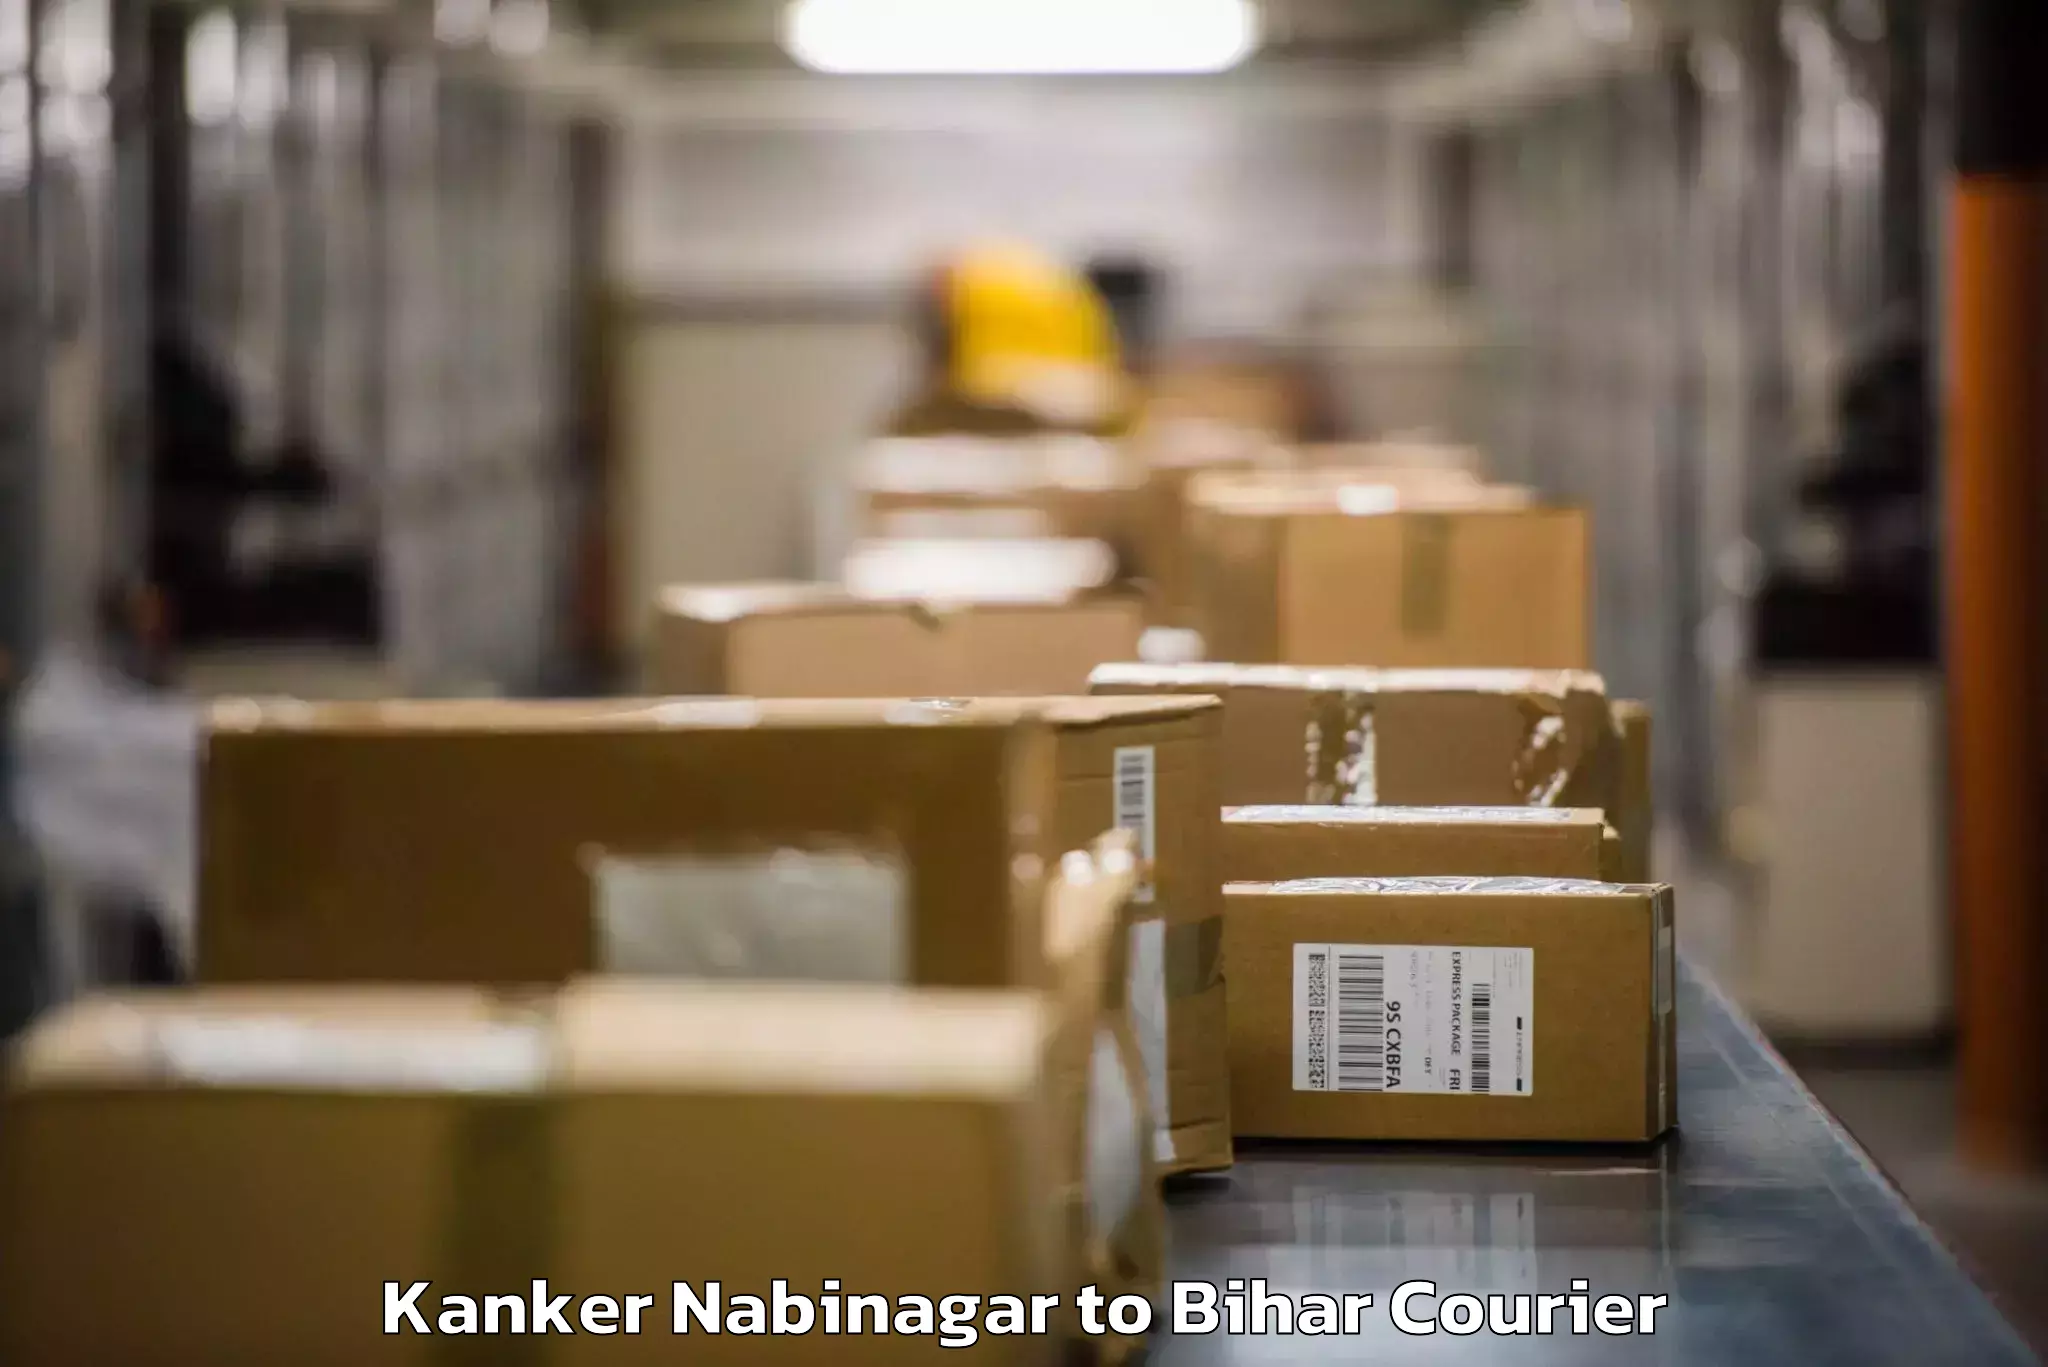 Emergency baggage service in Kanker Nabinagar to Bihar